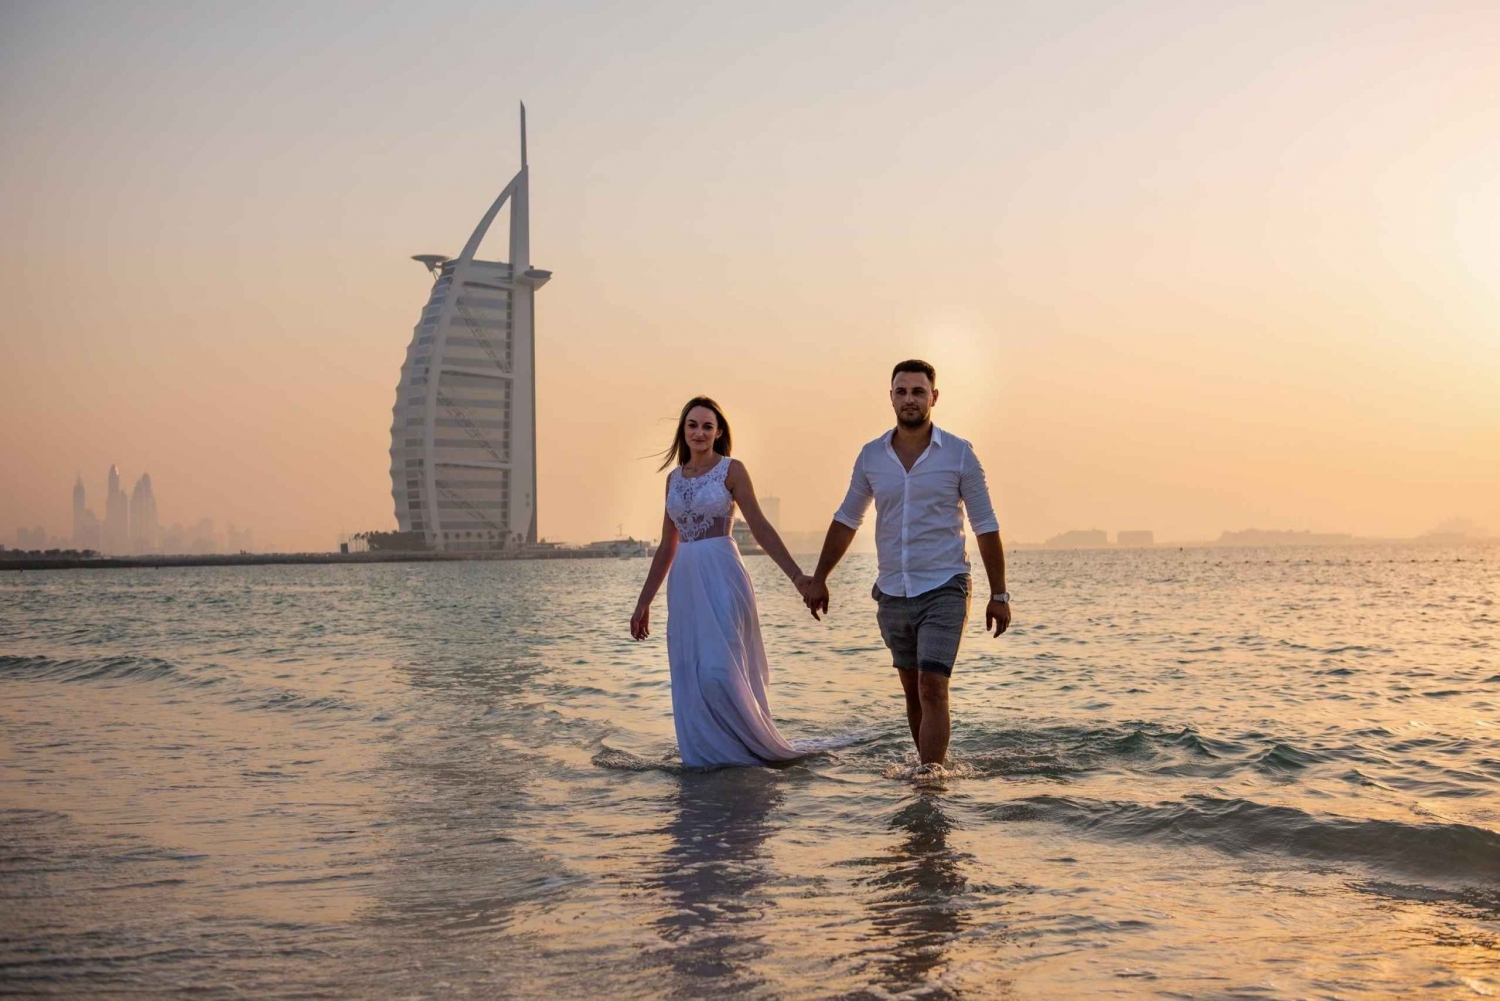 Dubai Photo Shoot with a Personal Travel Photographer